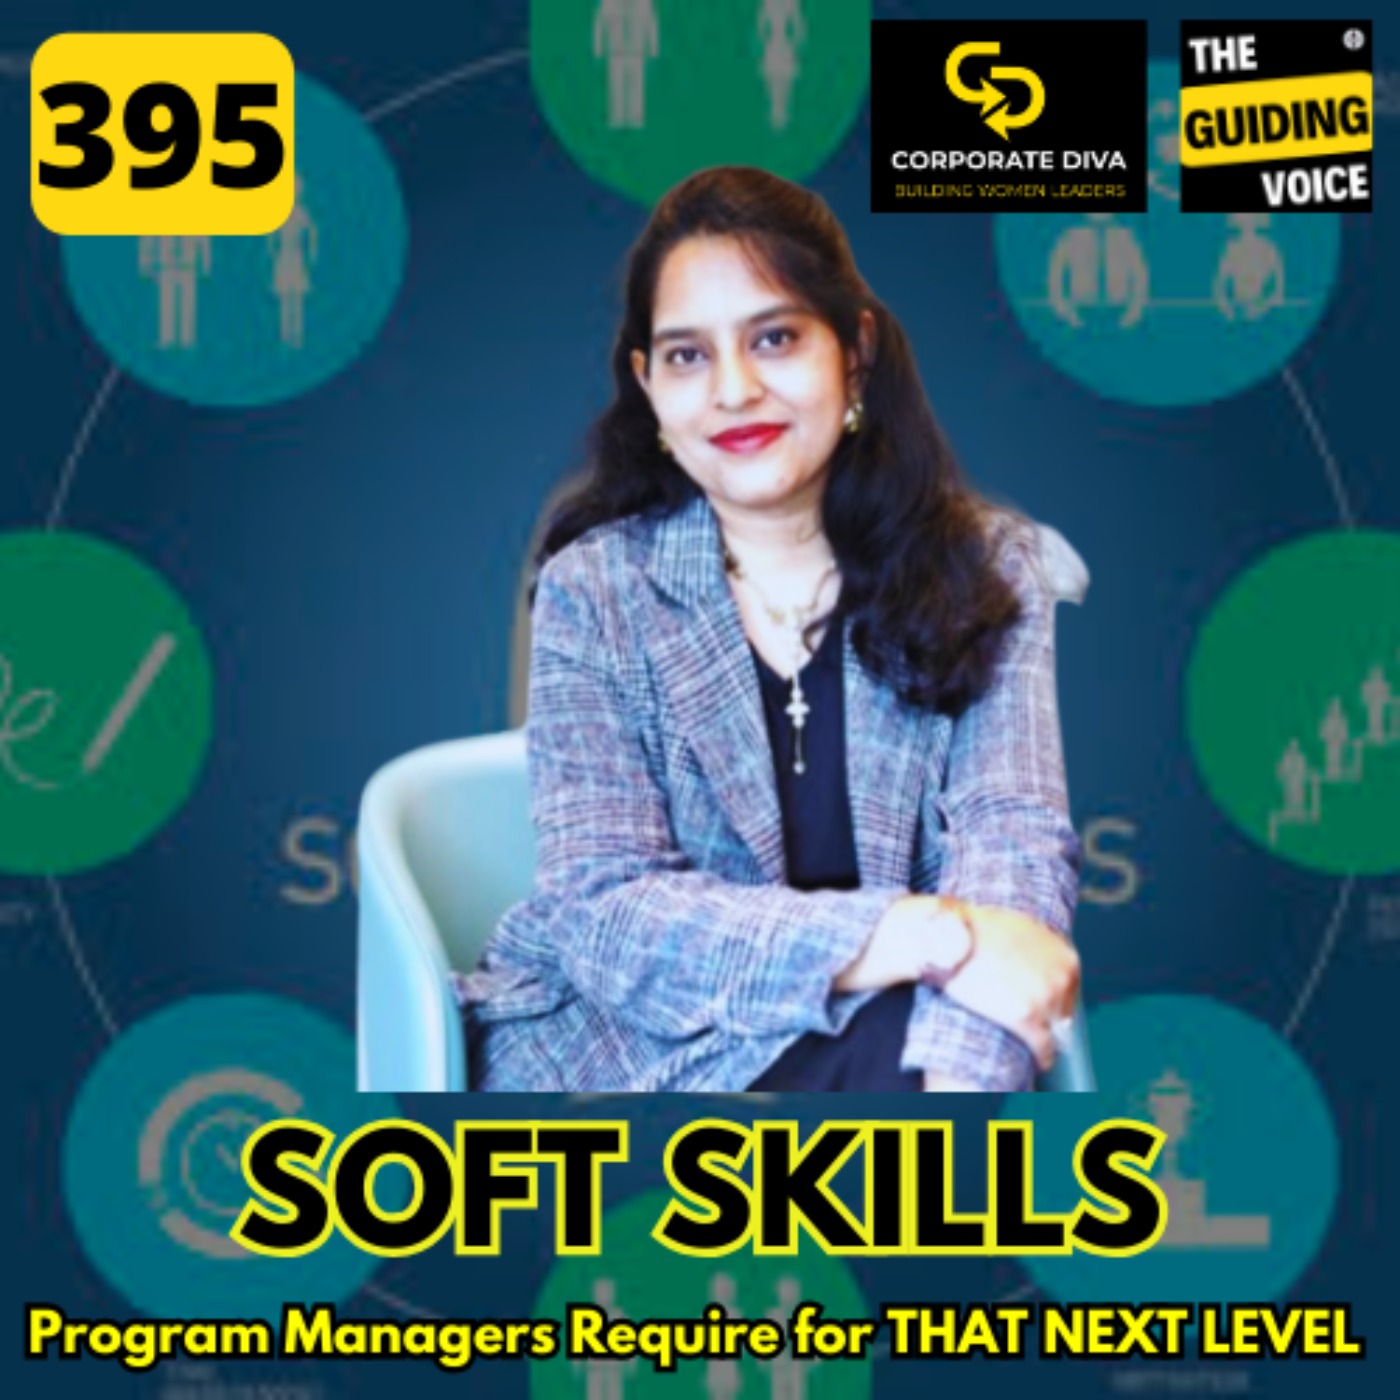 Soft skills for program managers | Tahseen Rana TGV Corporate Diva | #TGV395